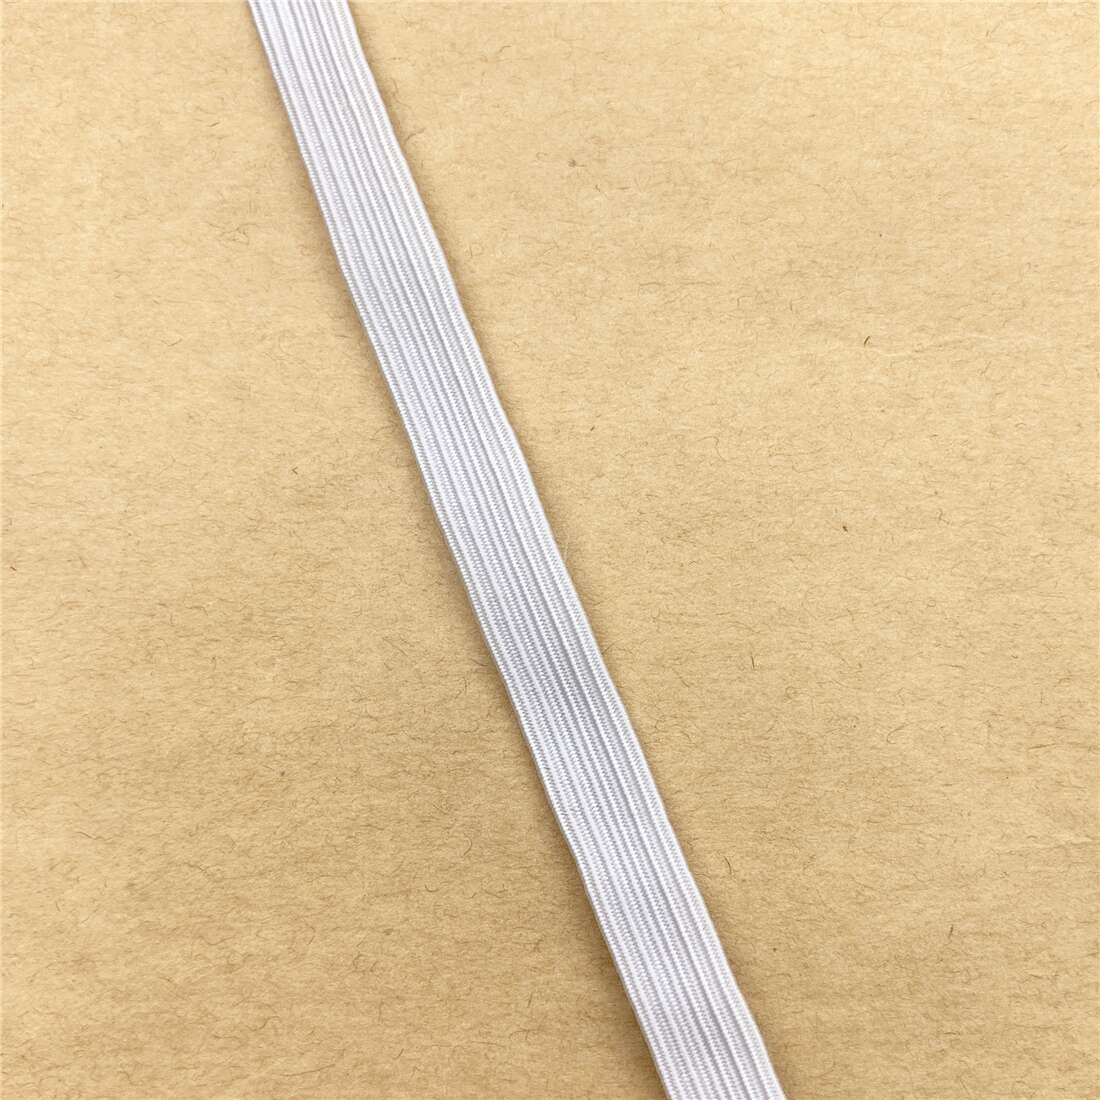 1cm wide white elastic - modeS4u